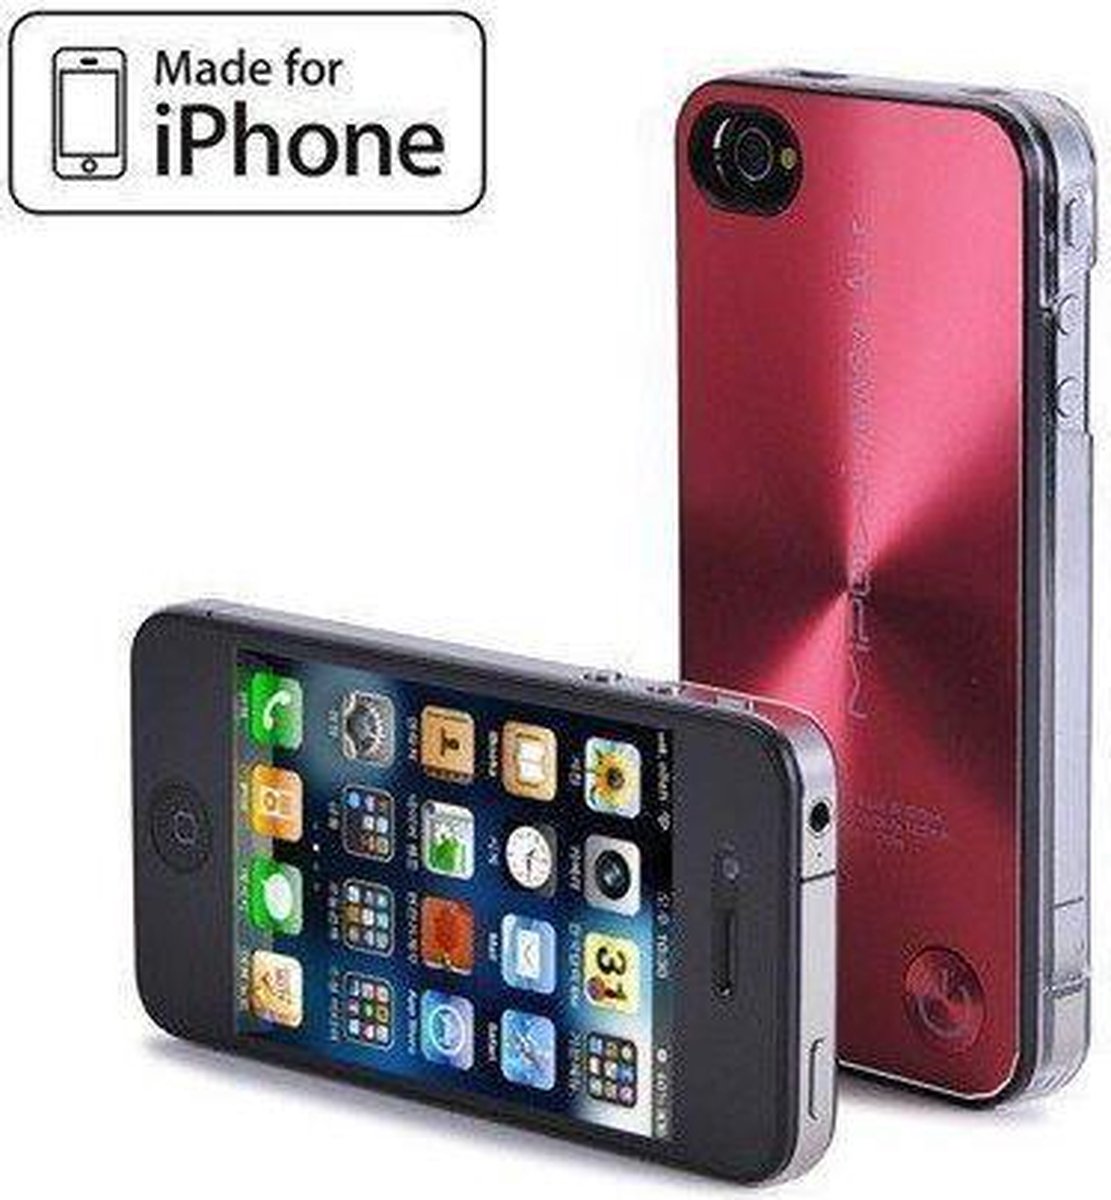 Mipow Maca Air 1200 Battery Case Red voor iPhone 4 / 4S | bol.com